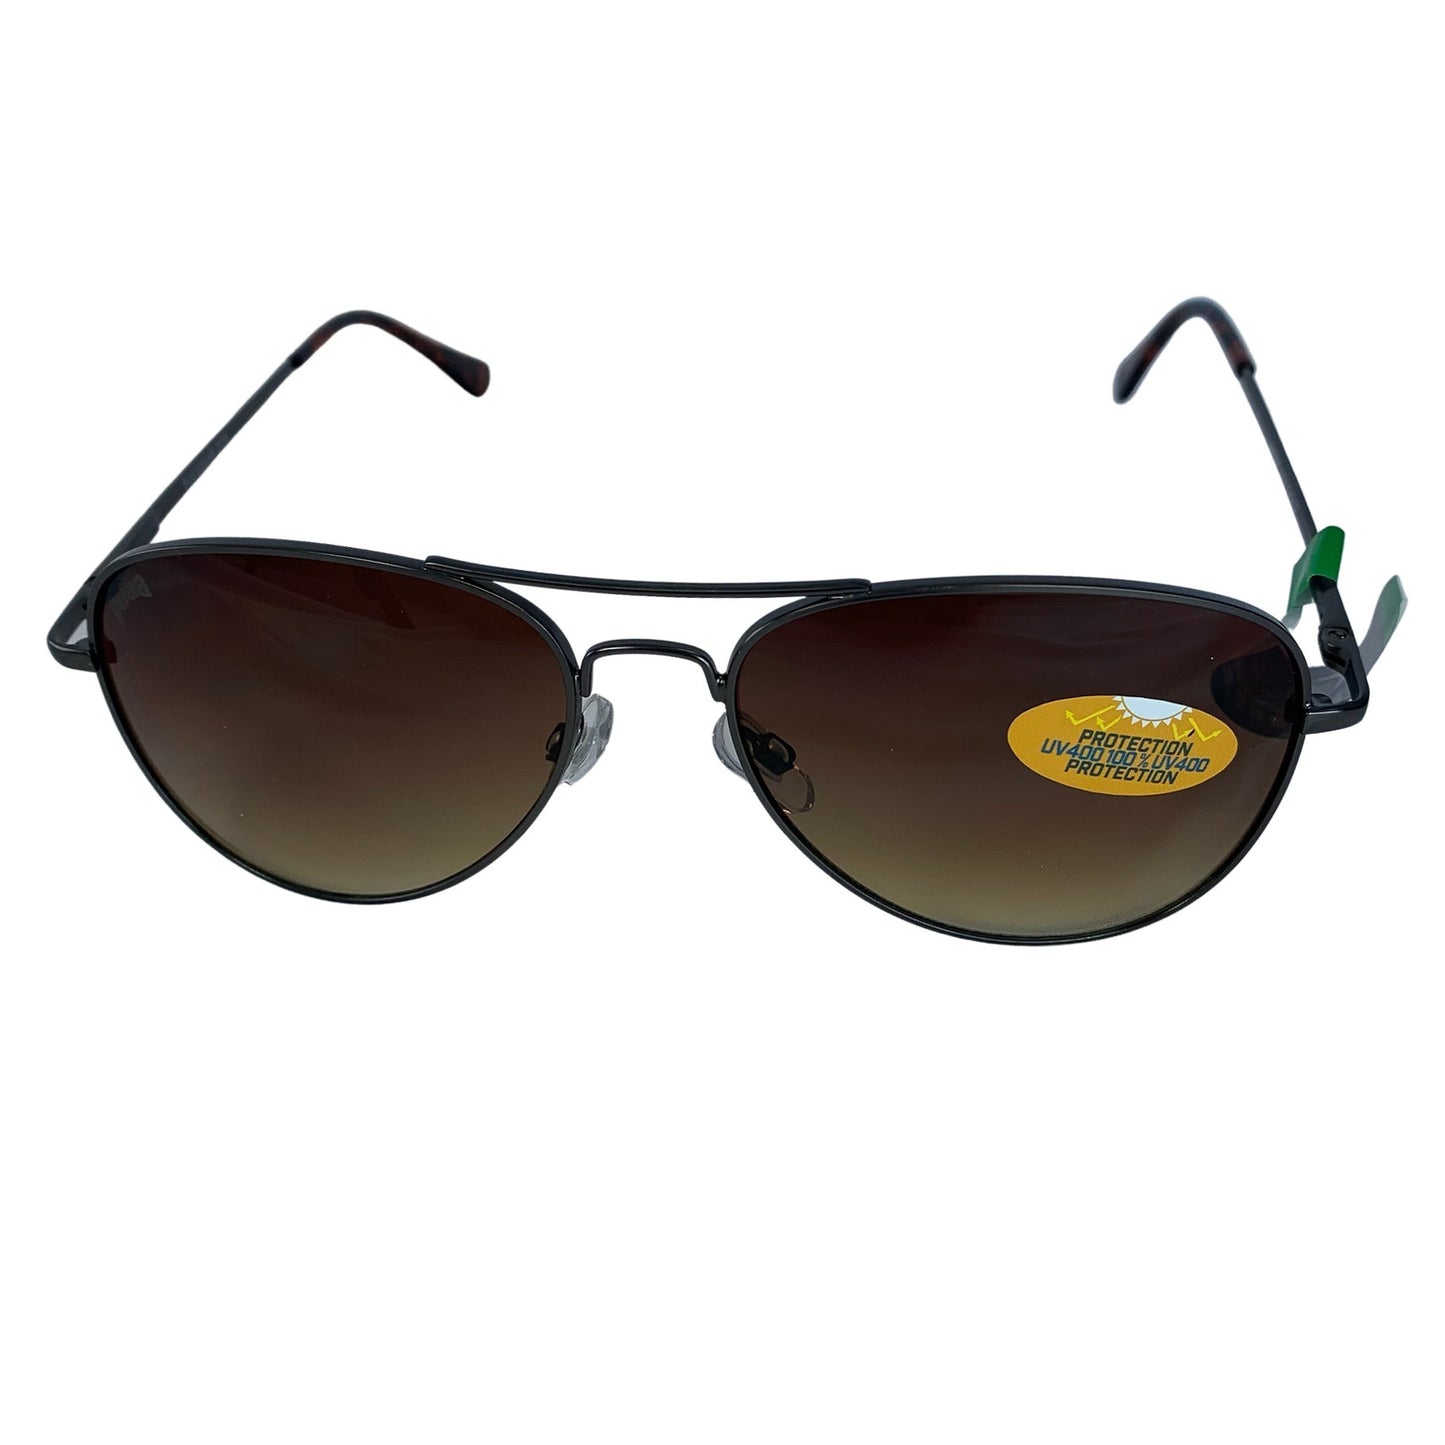 Sunglasses Mens Aviator Pugs assorted   srp 19.99